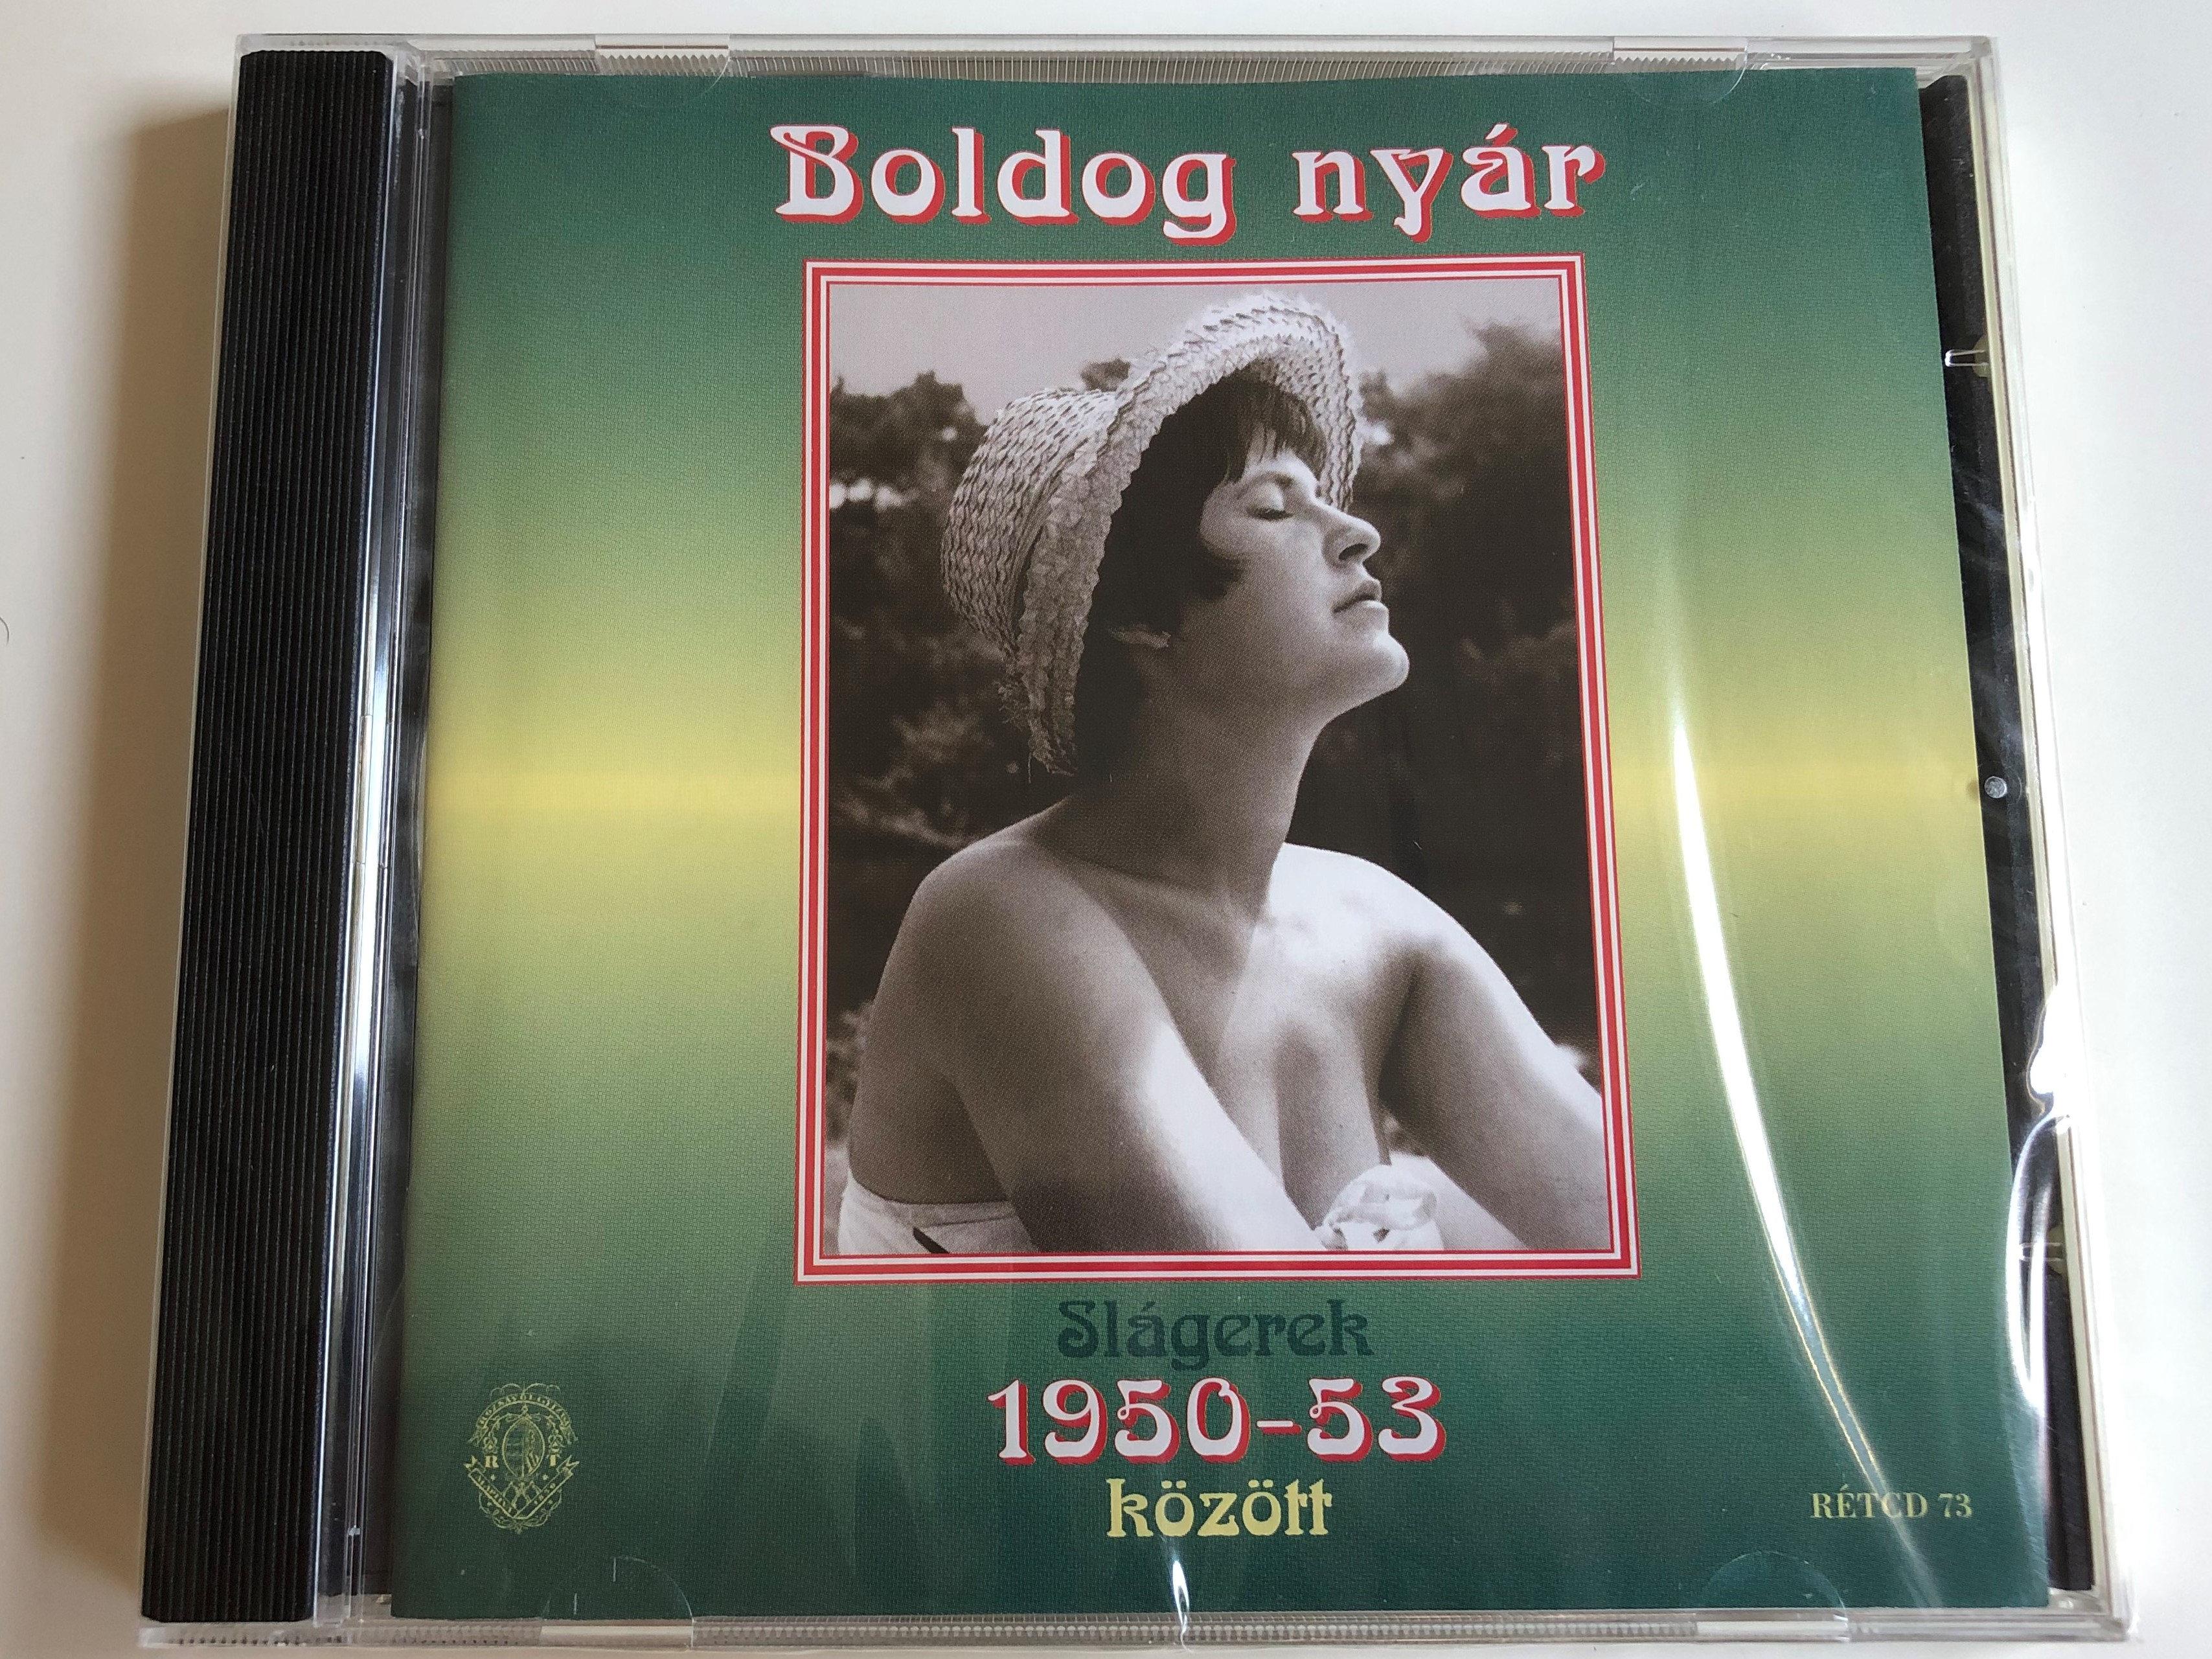 boldog-nyar-slagerek-1950-53-kozott-rozsavolgy-es-tarsa-audio-cd-2011-r-tcd-73-1-.jpg